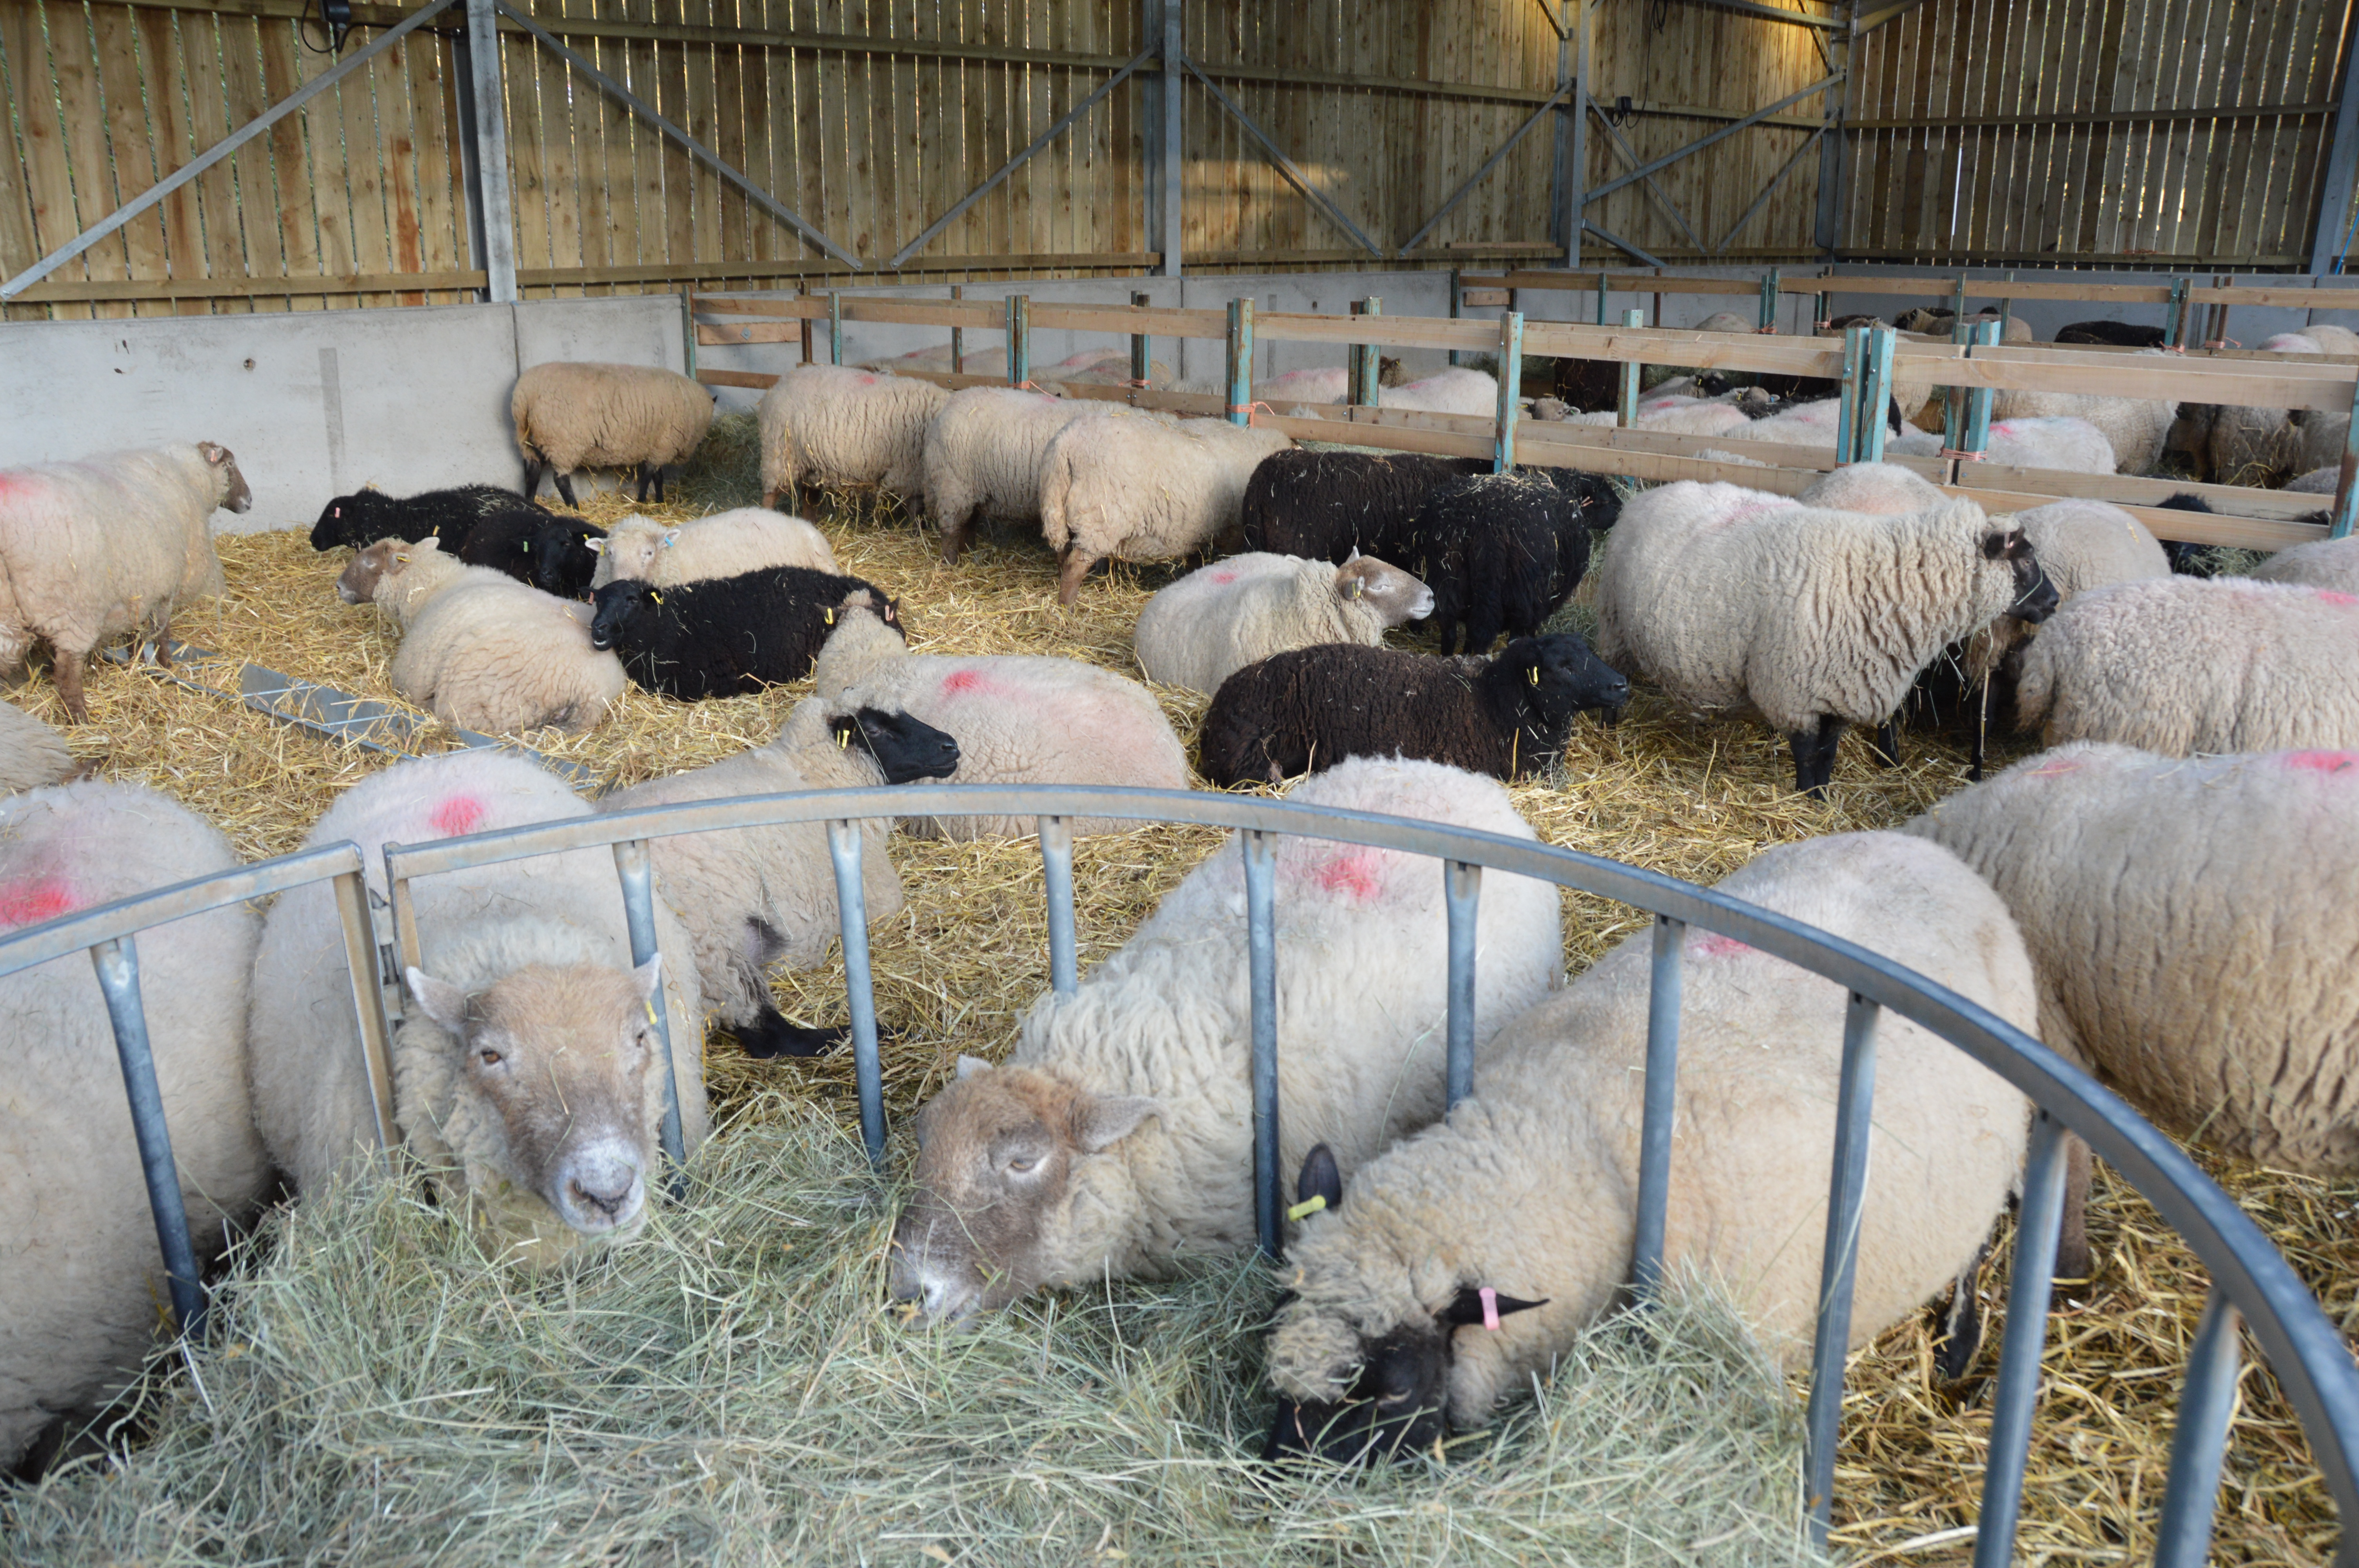 Image: Lambing shed